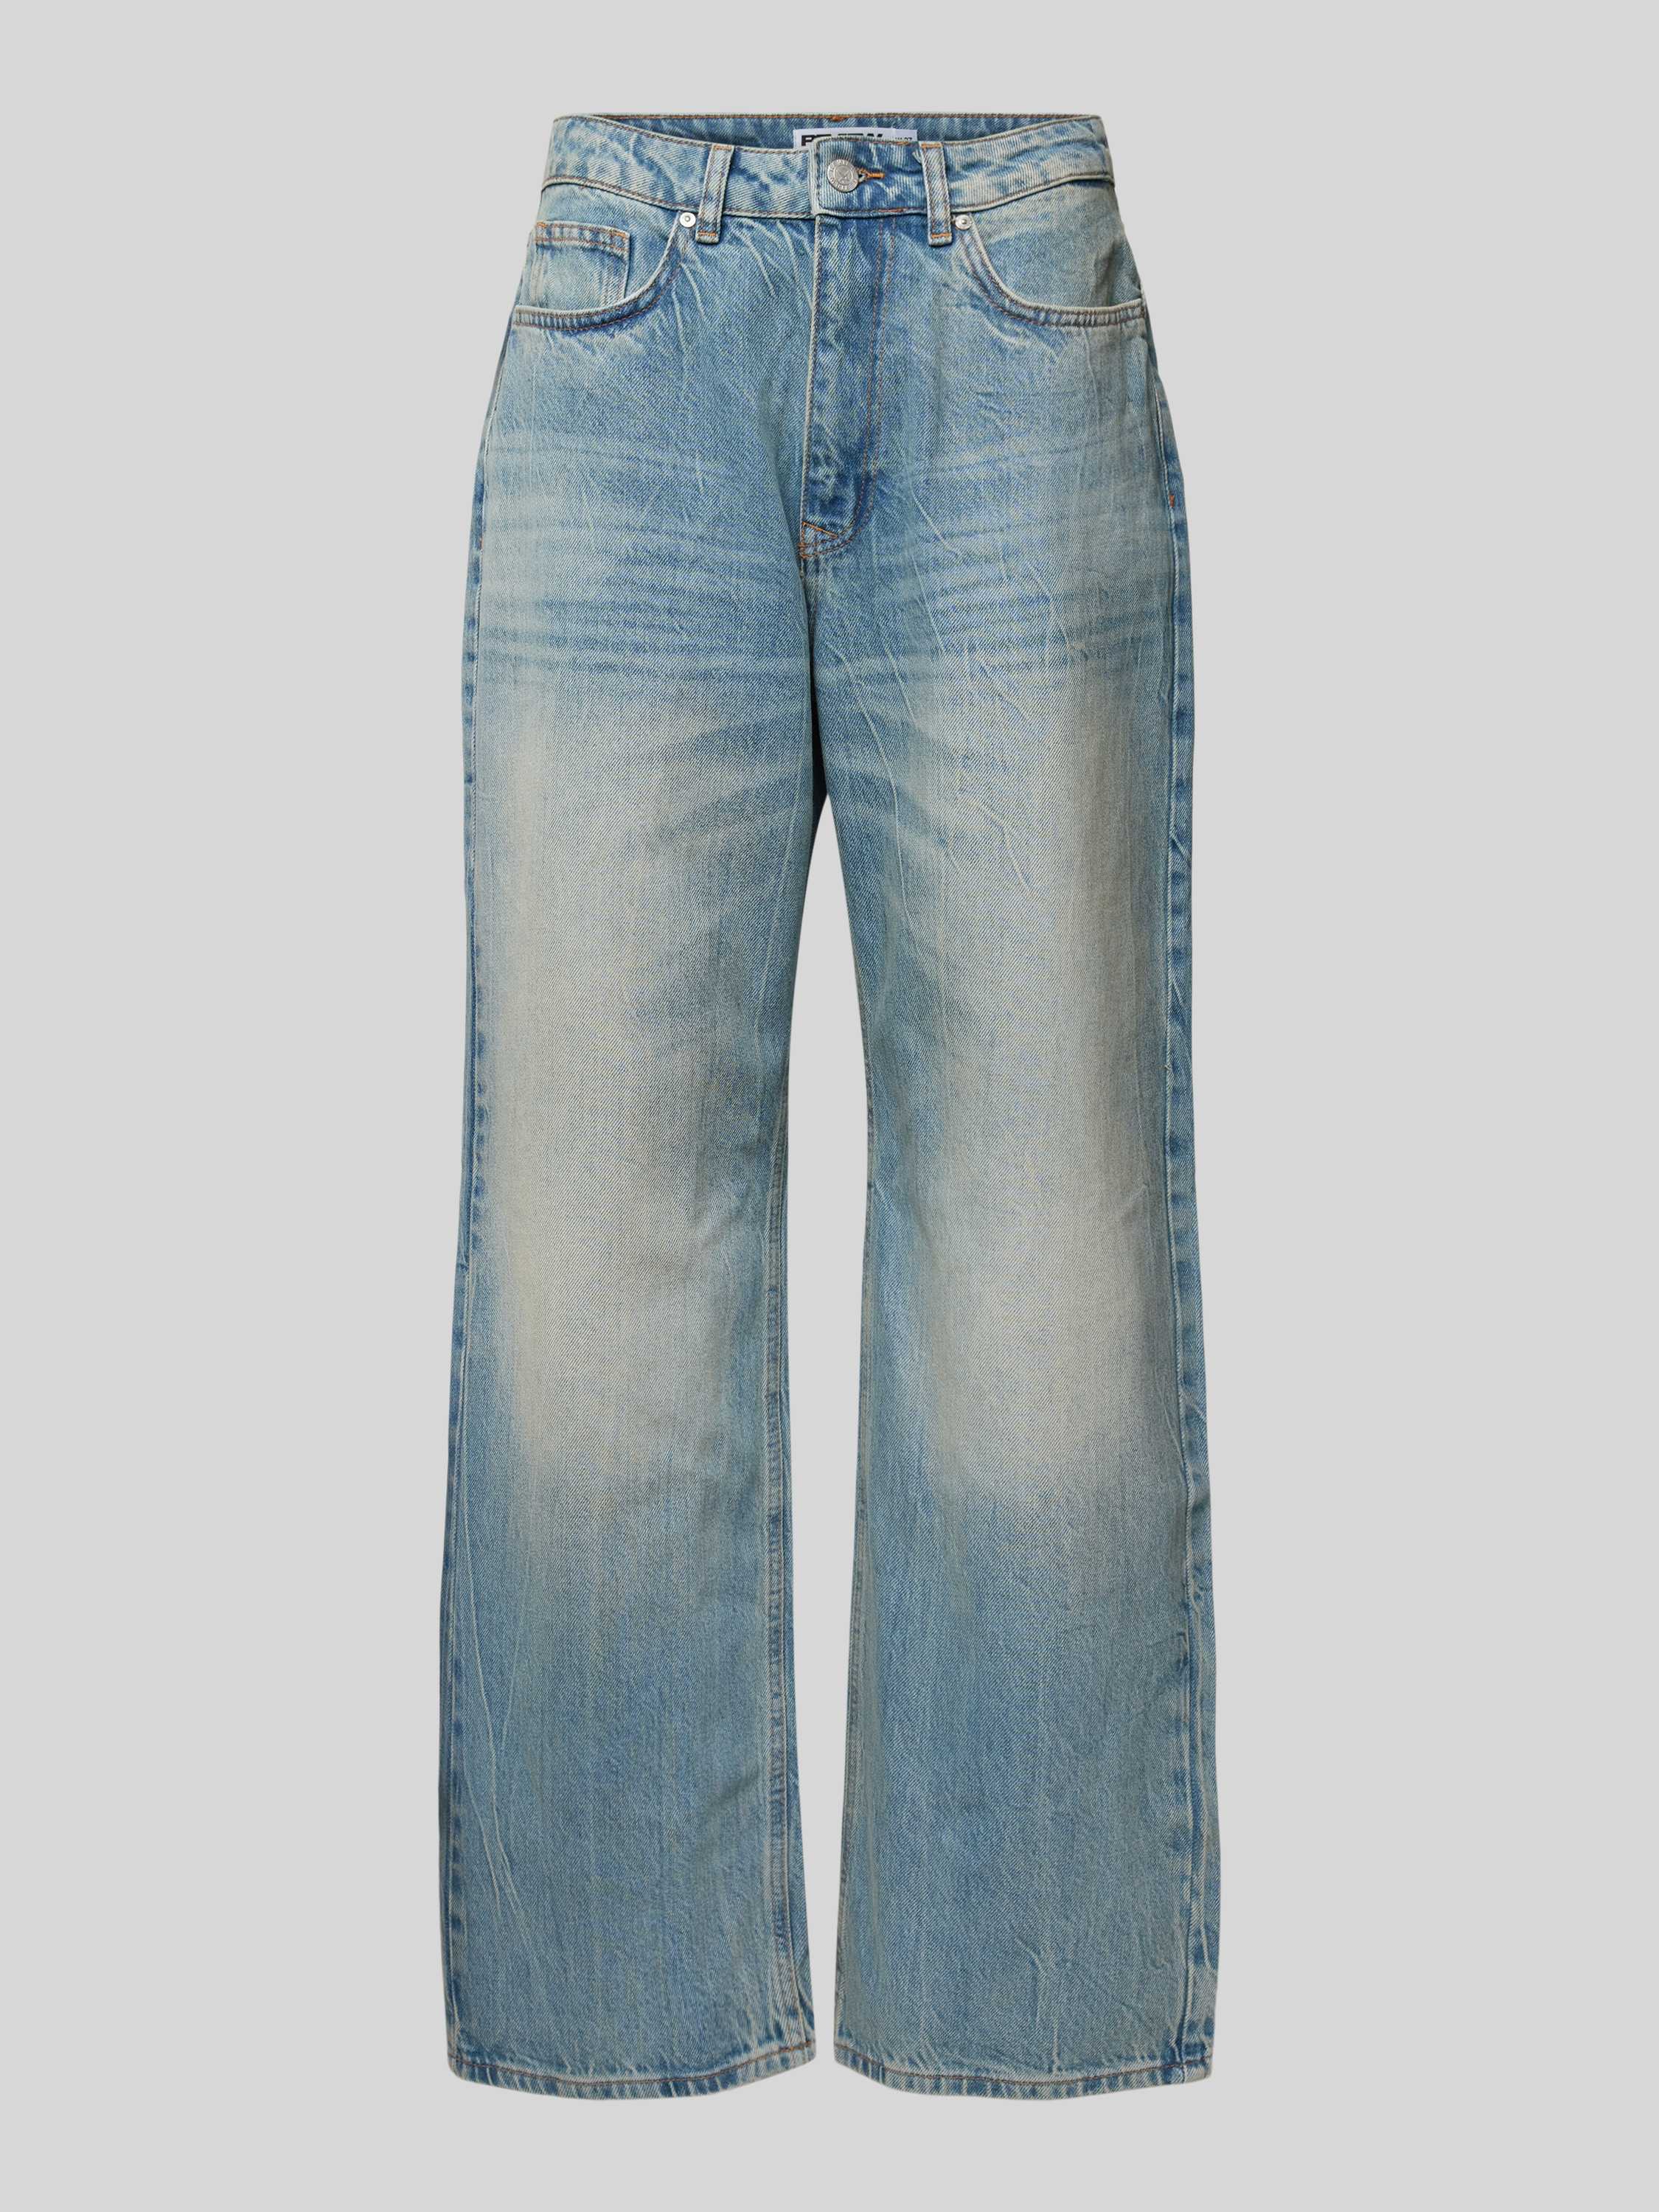 Jeans mit 5-Pocket-Design, Peek & Cloppenburg